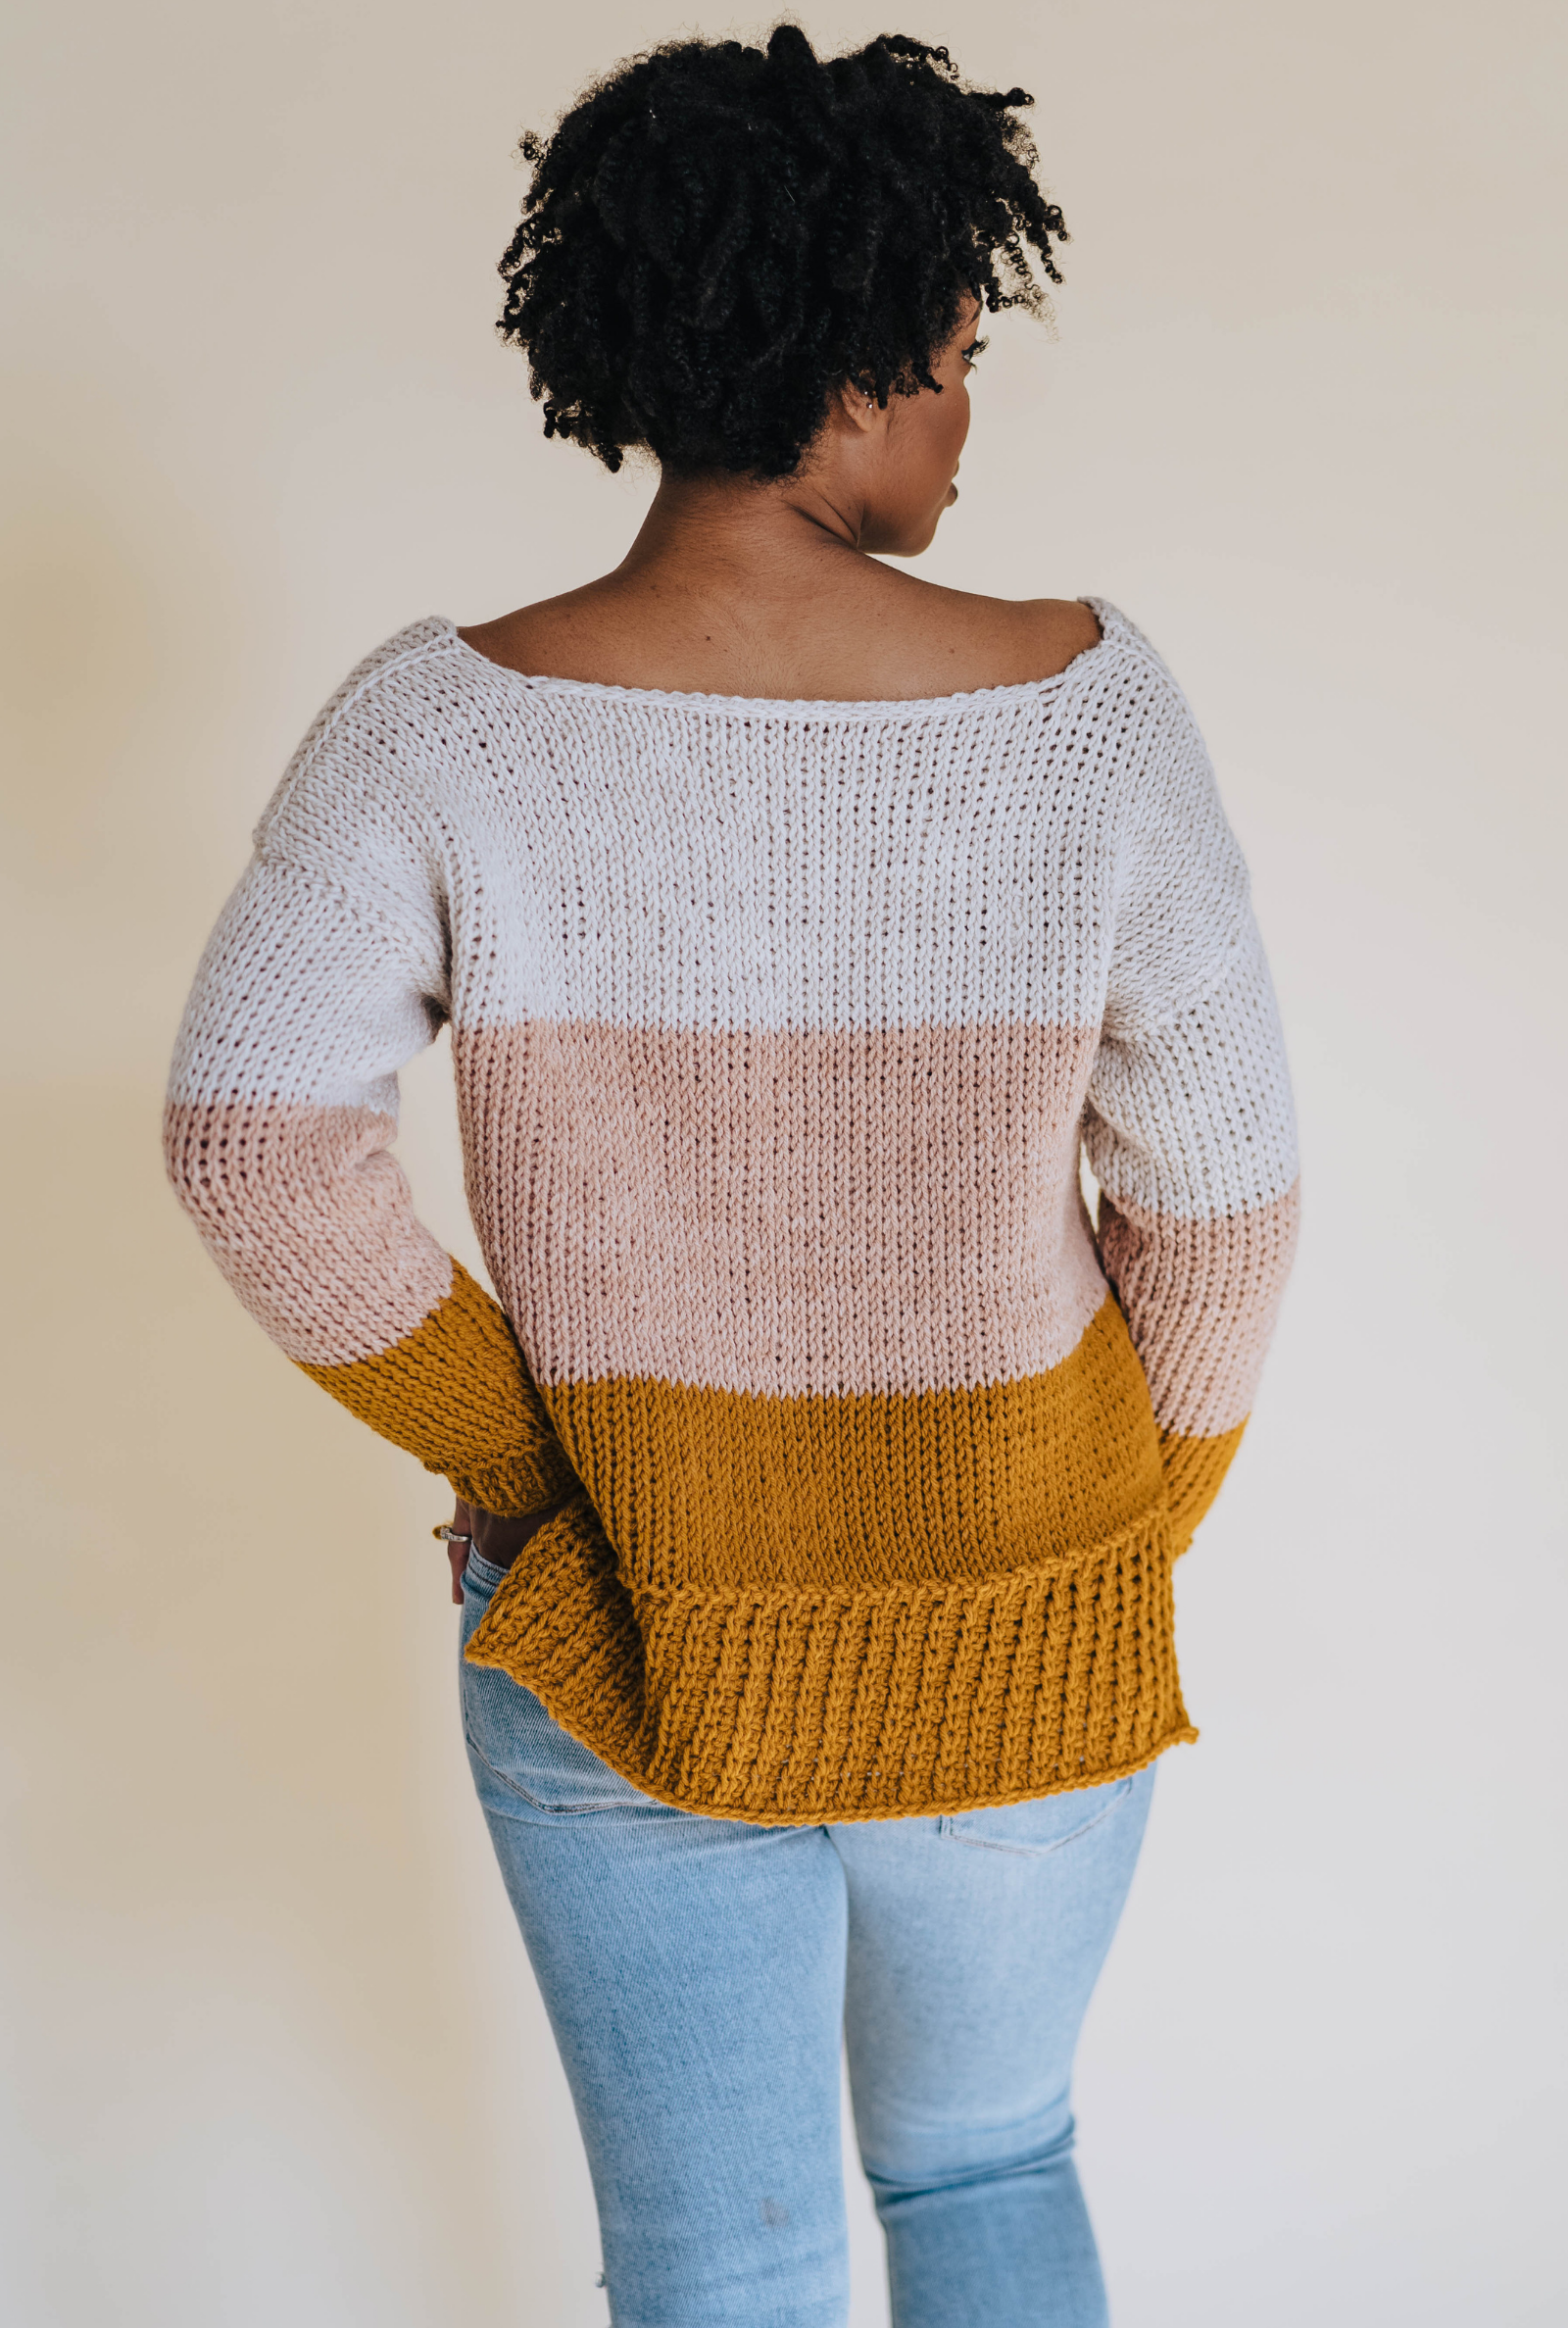 Mellow Tunic // Crochet PDF Pattern